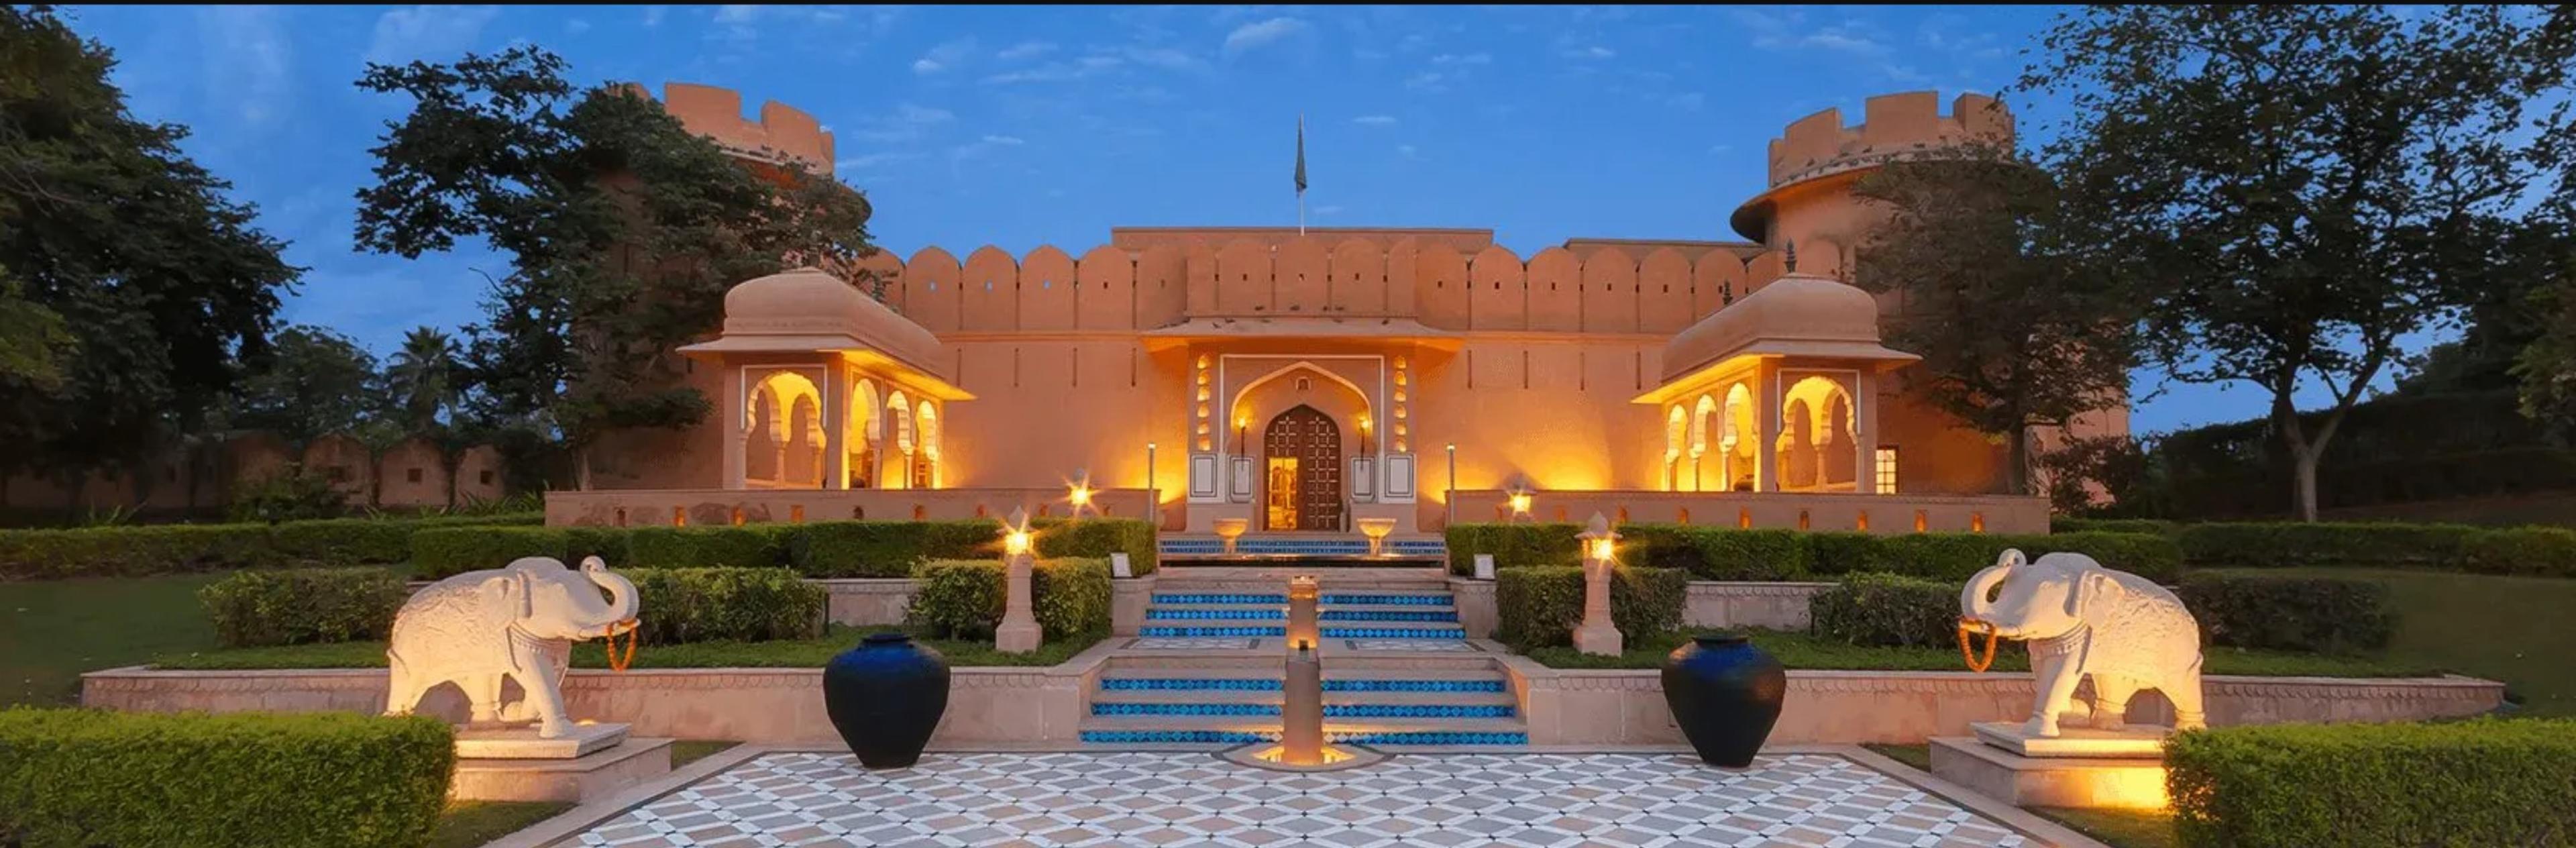 The Oberoi Rajvilas Hotel - Jaipur, India